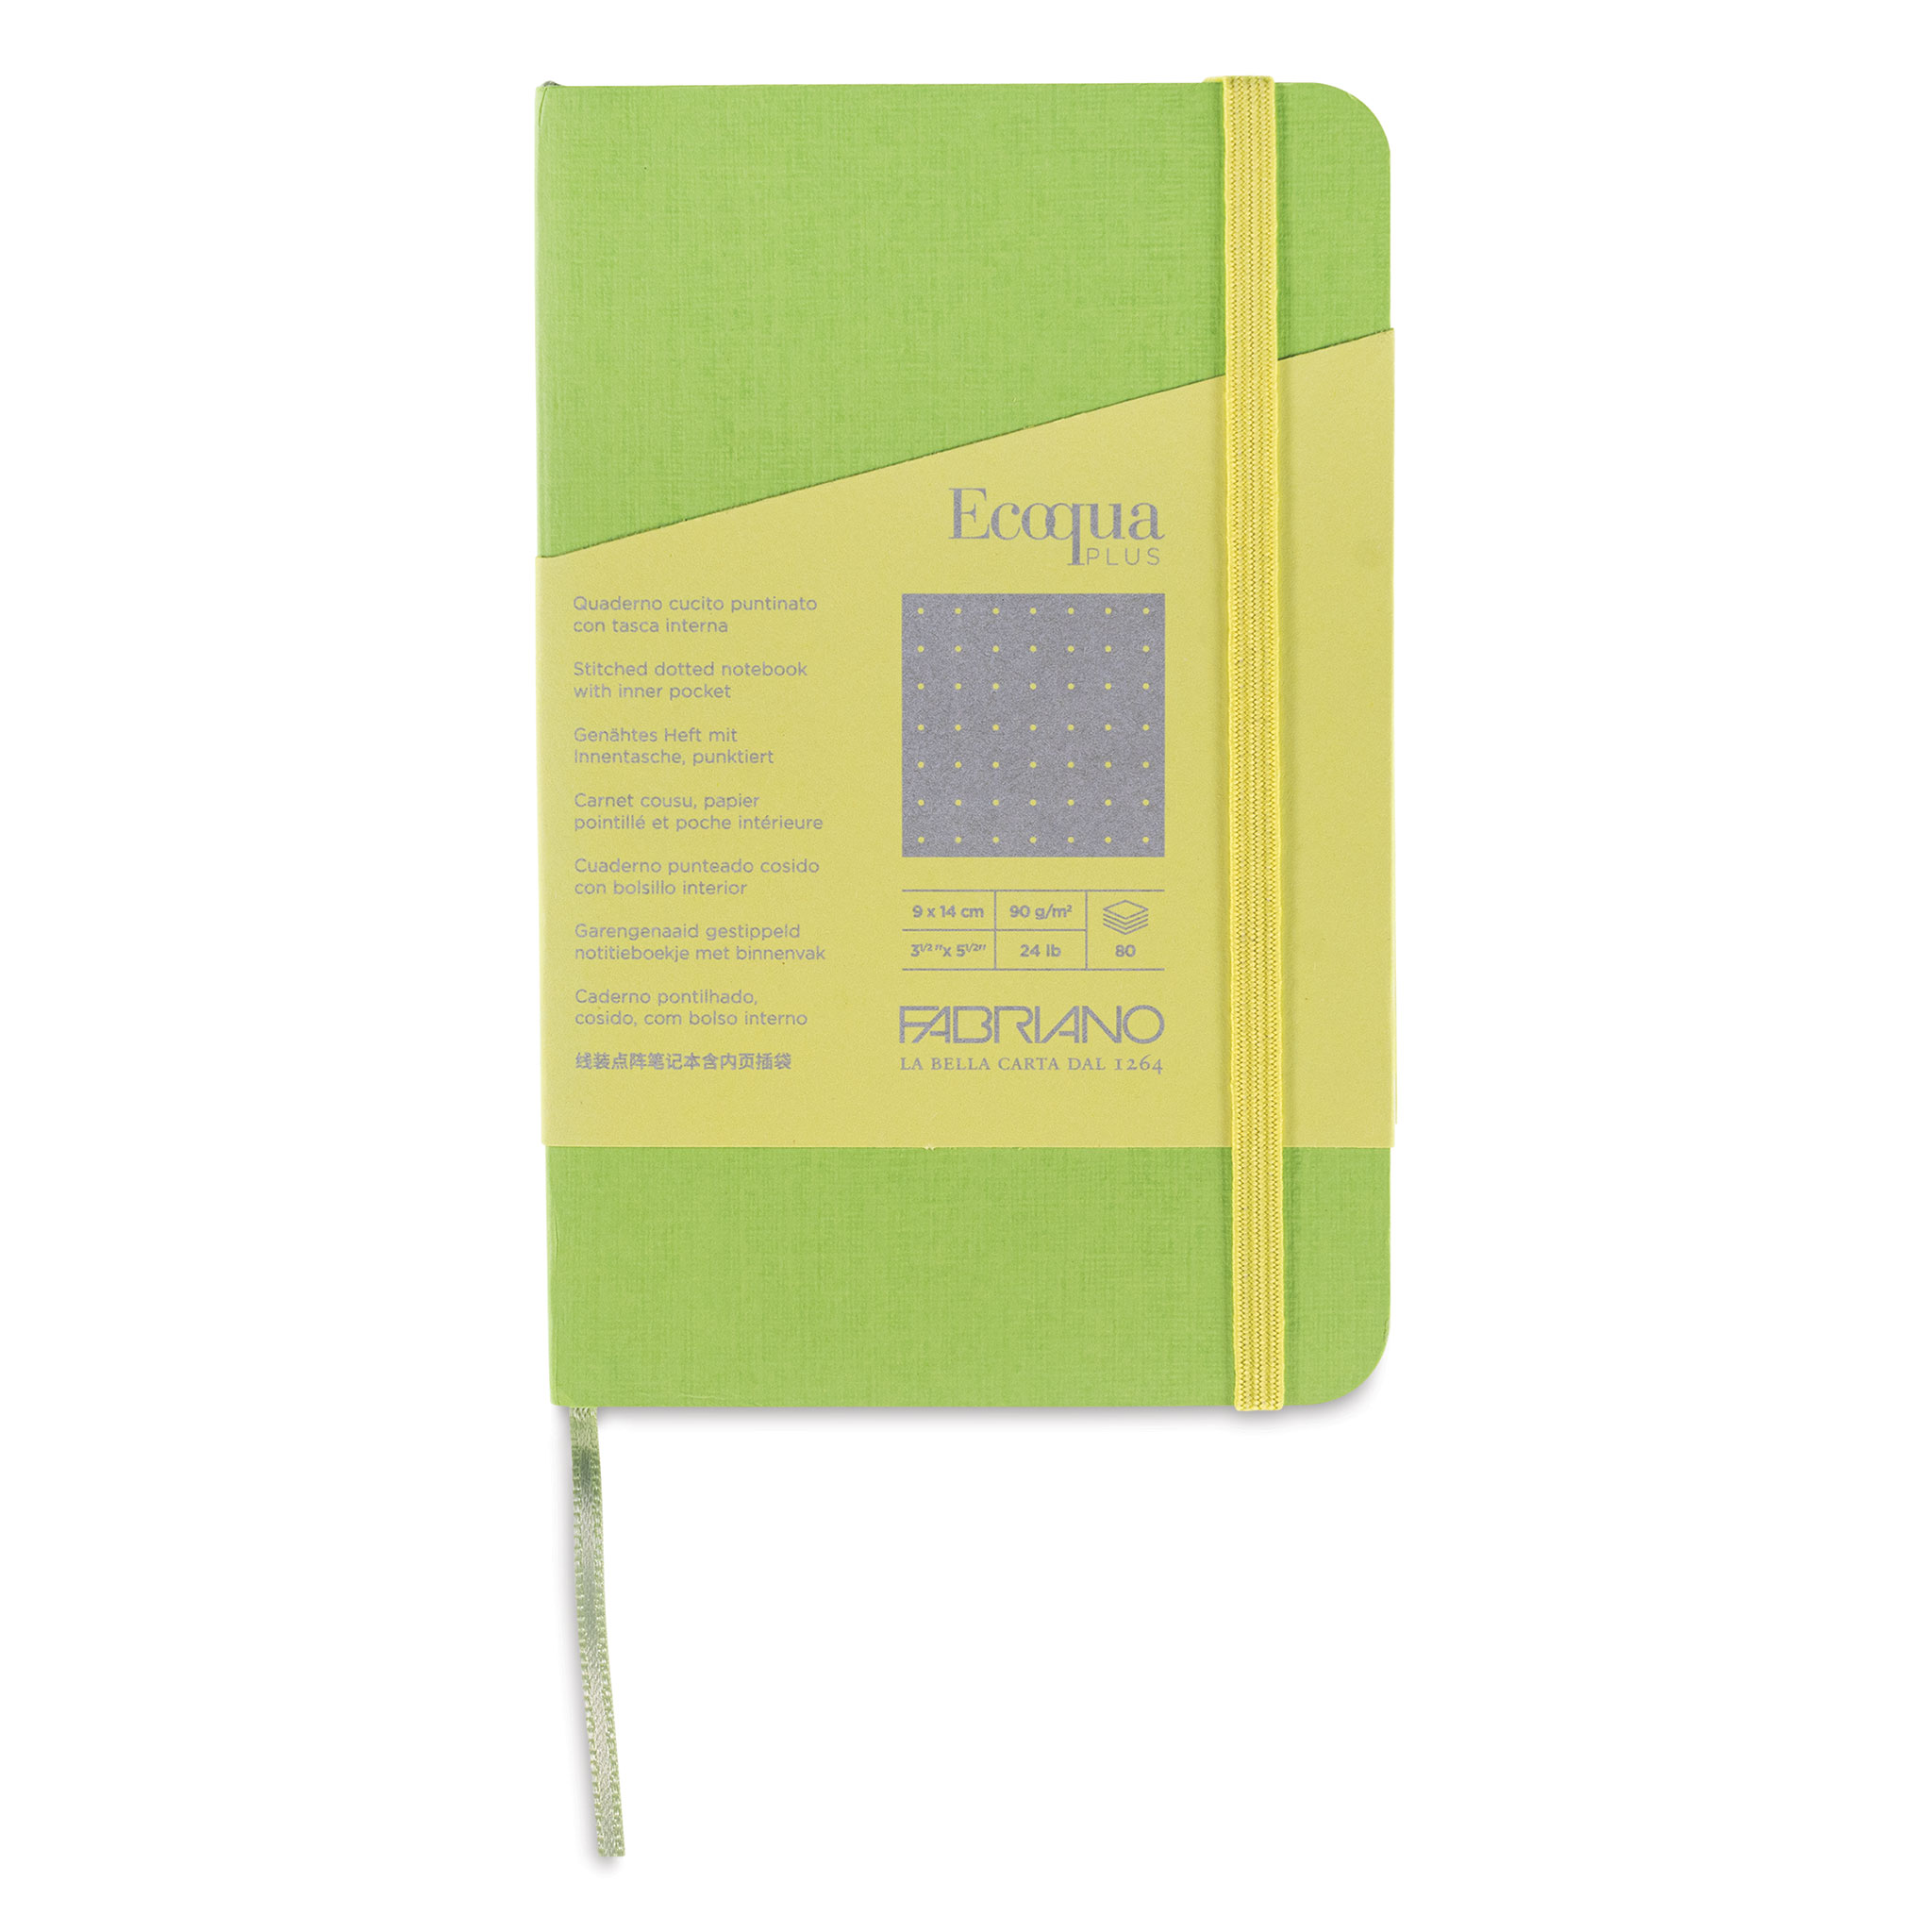 Fabriano EcoQua Plus Stitch-Bound Notebook - Lime, 3-1/2 x 5-1/2